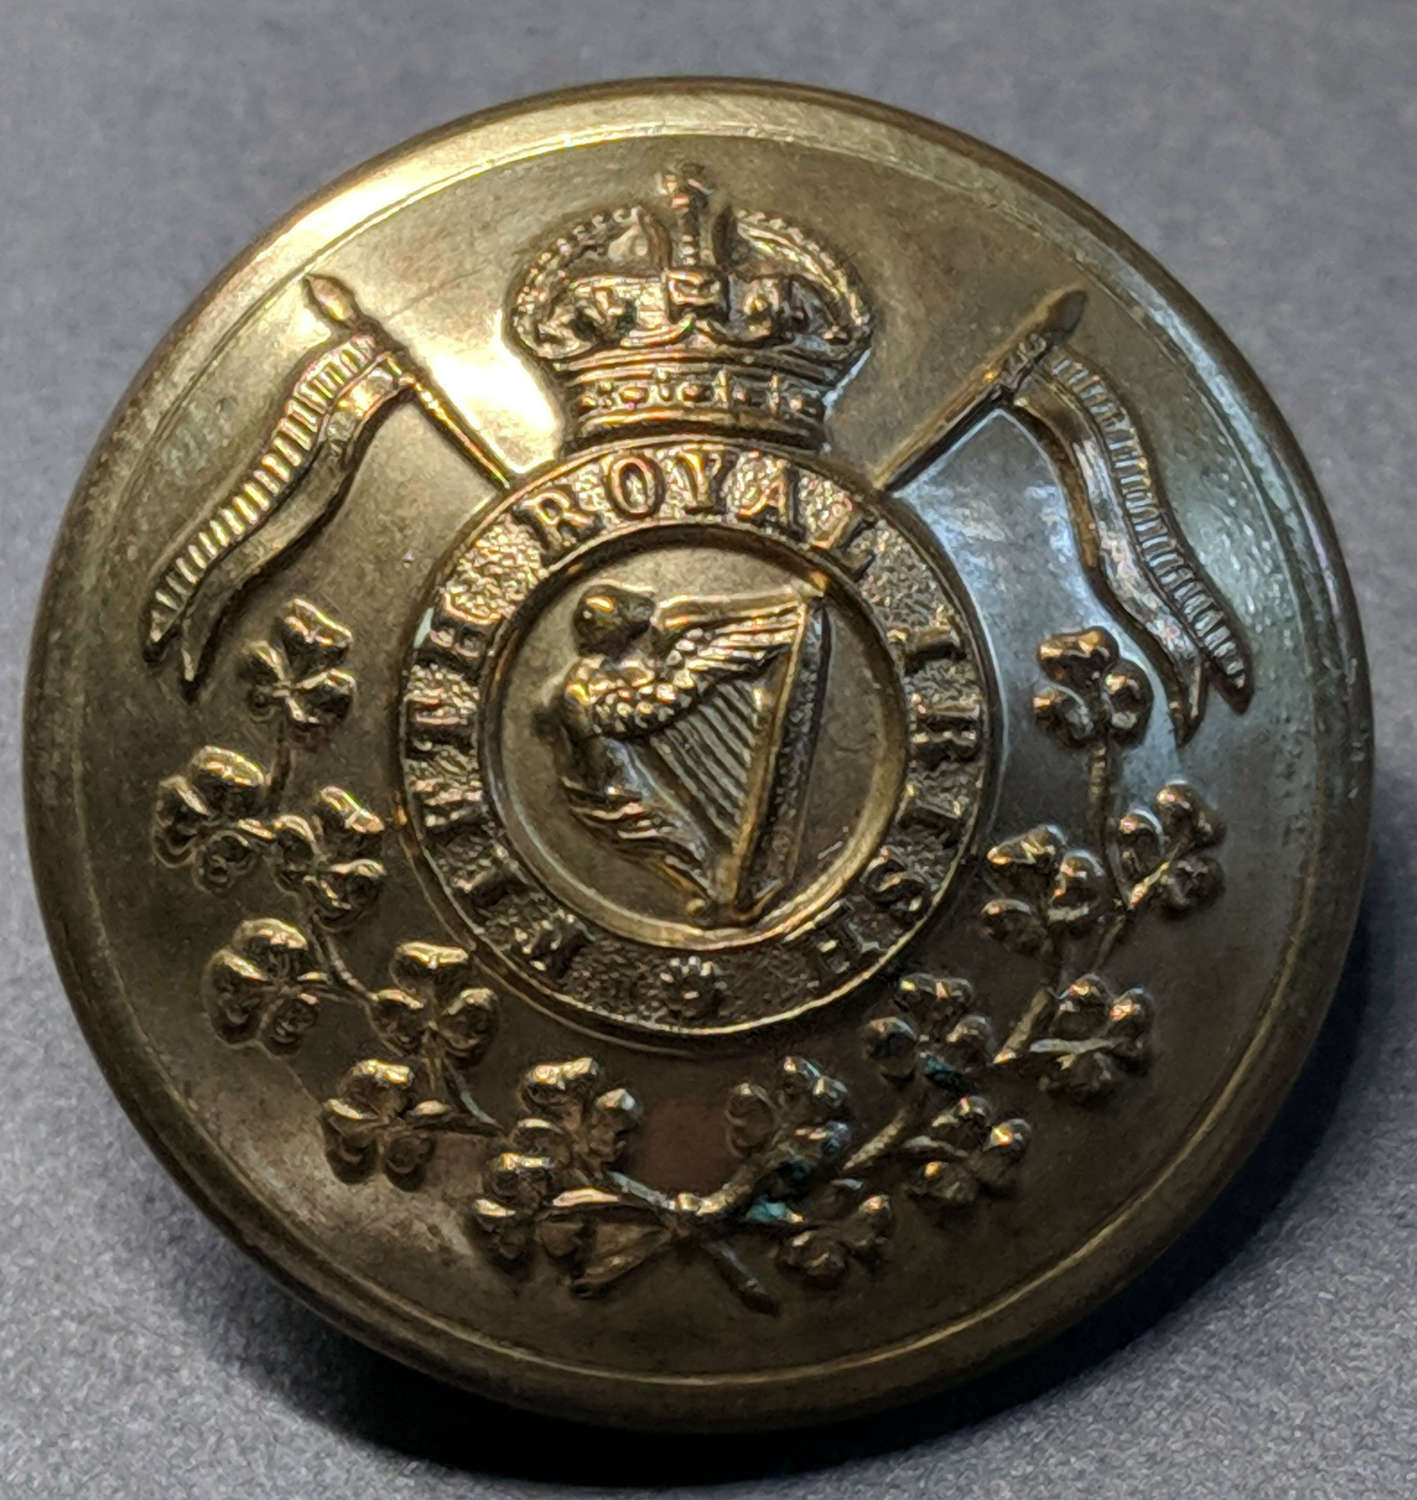 Edwardian 5th Irish Lancers Tunic Button